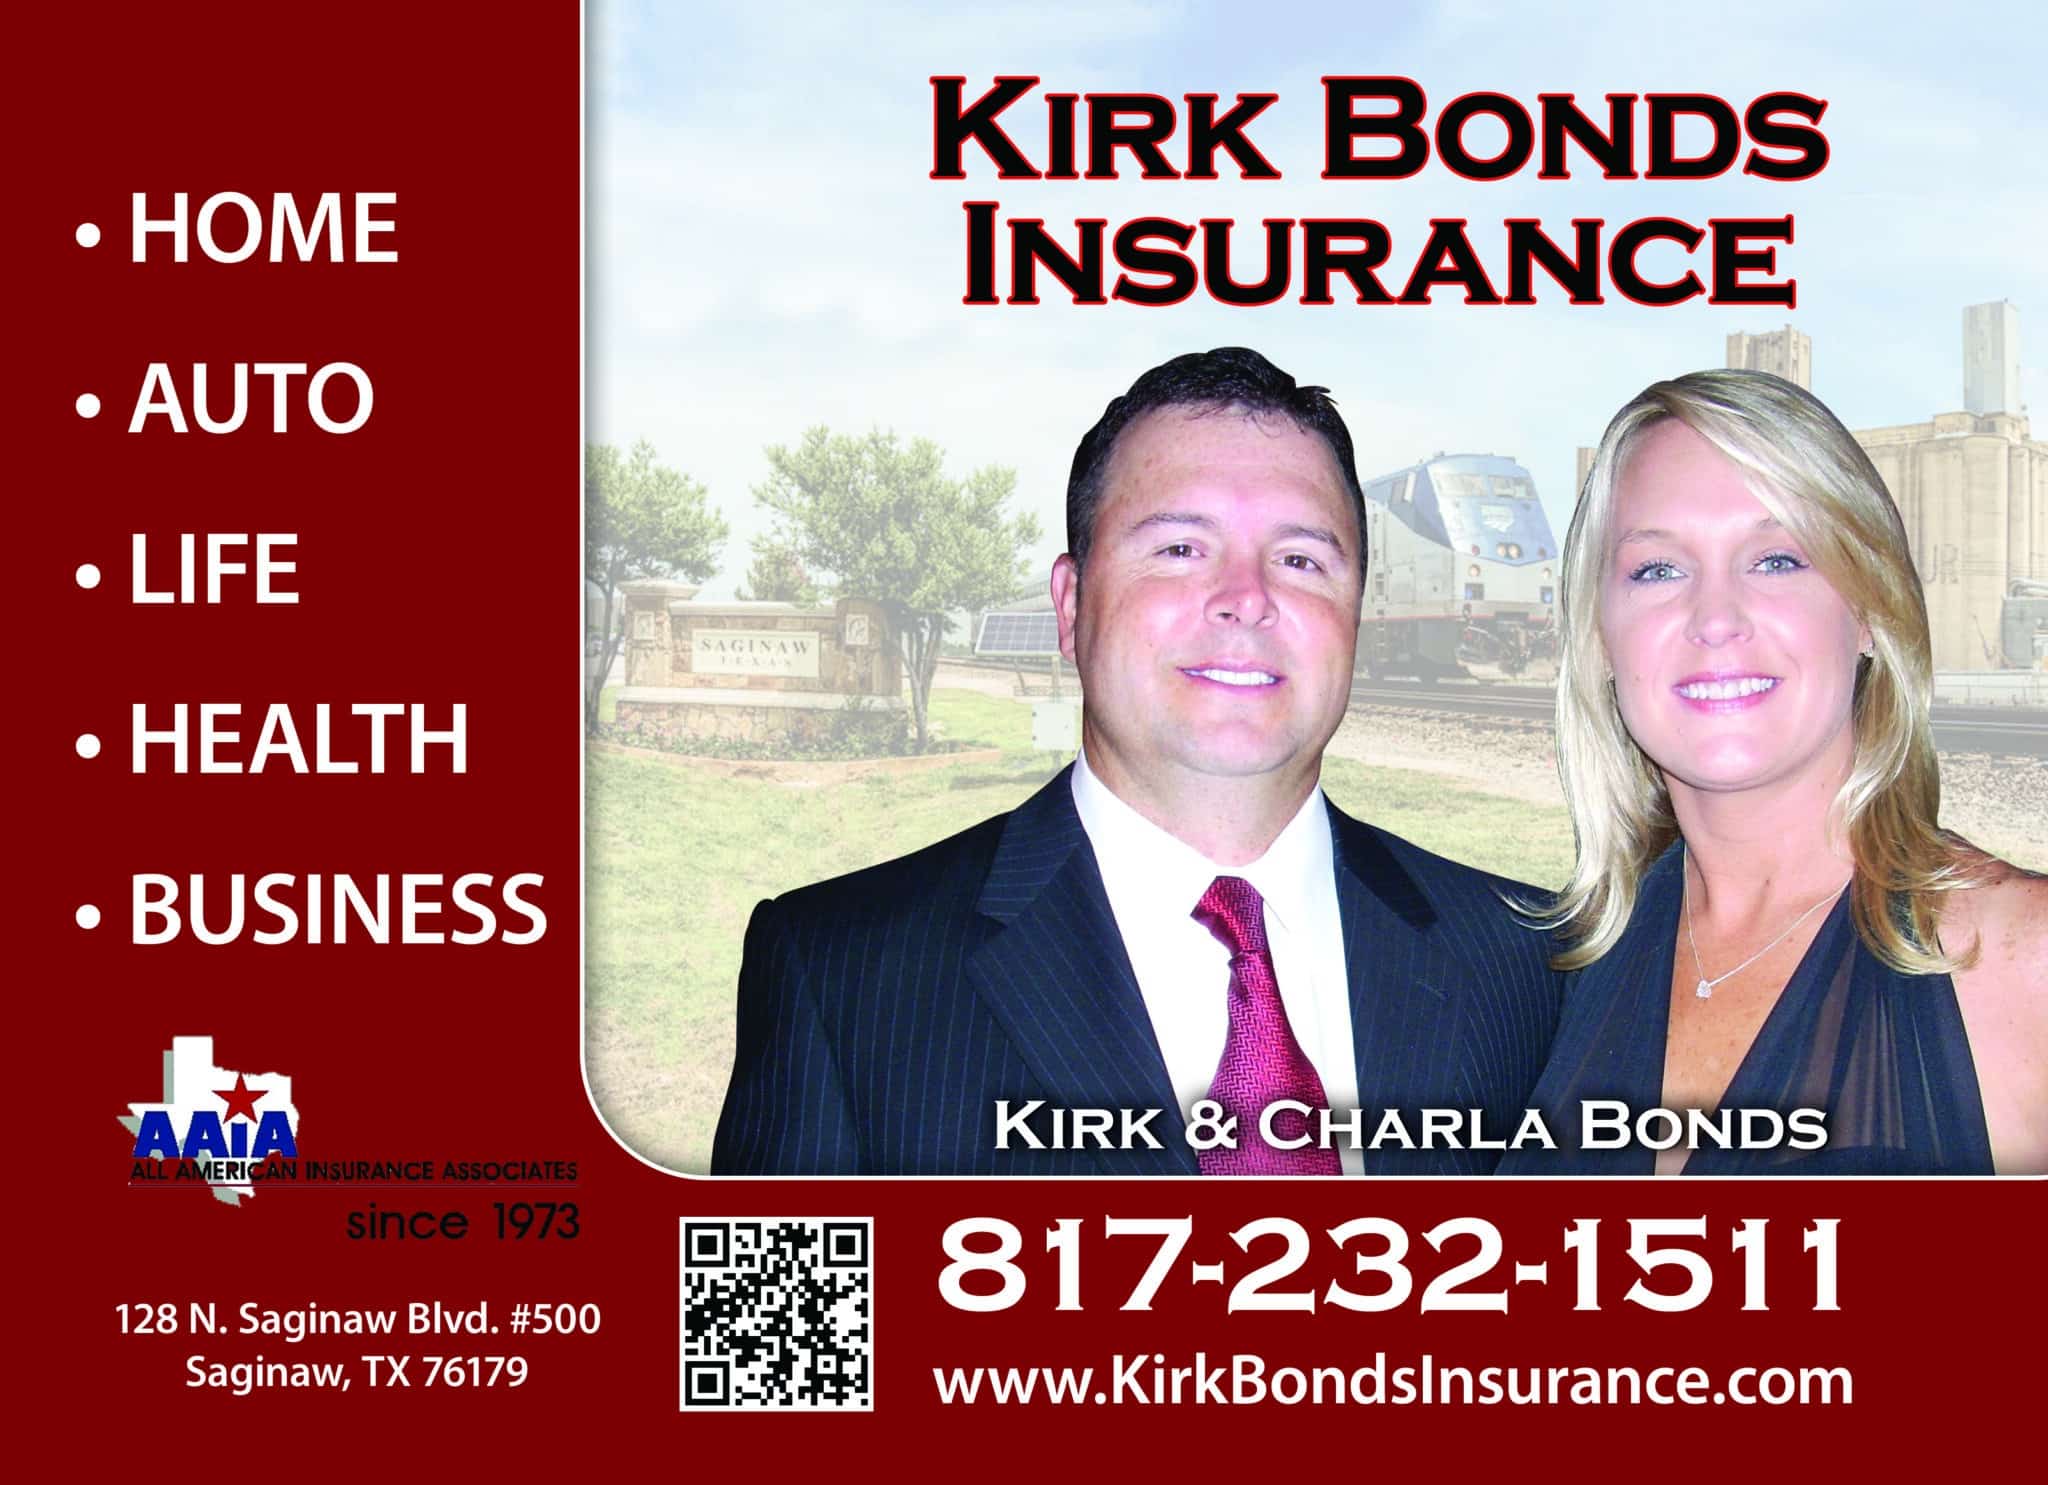 Kirk Bonds Insurance: 817-232-1511